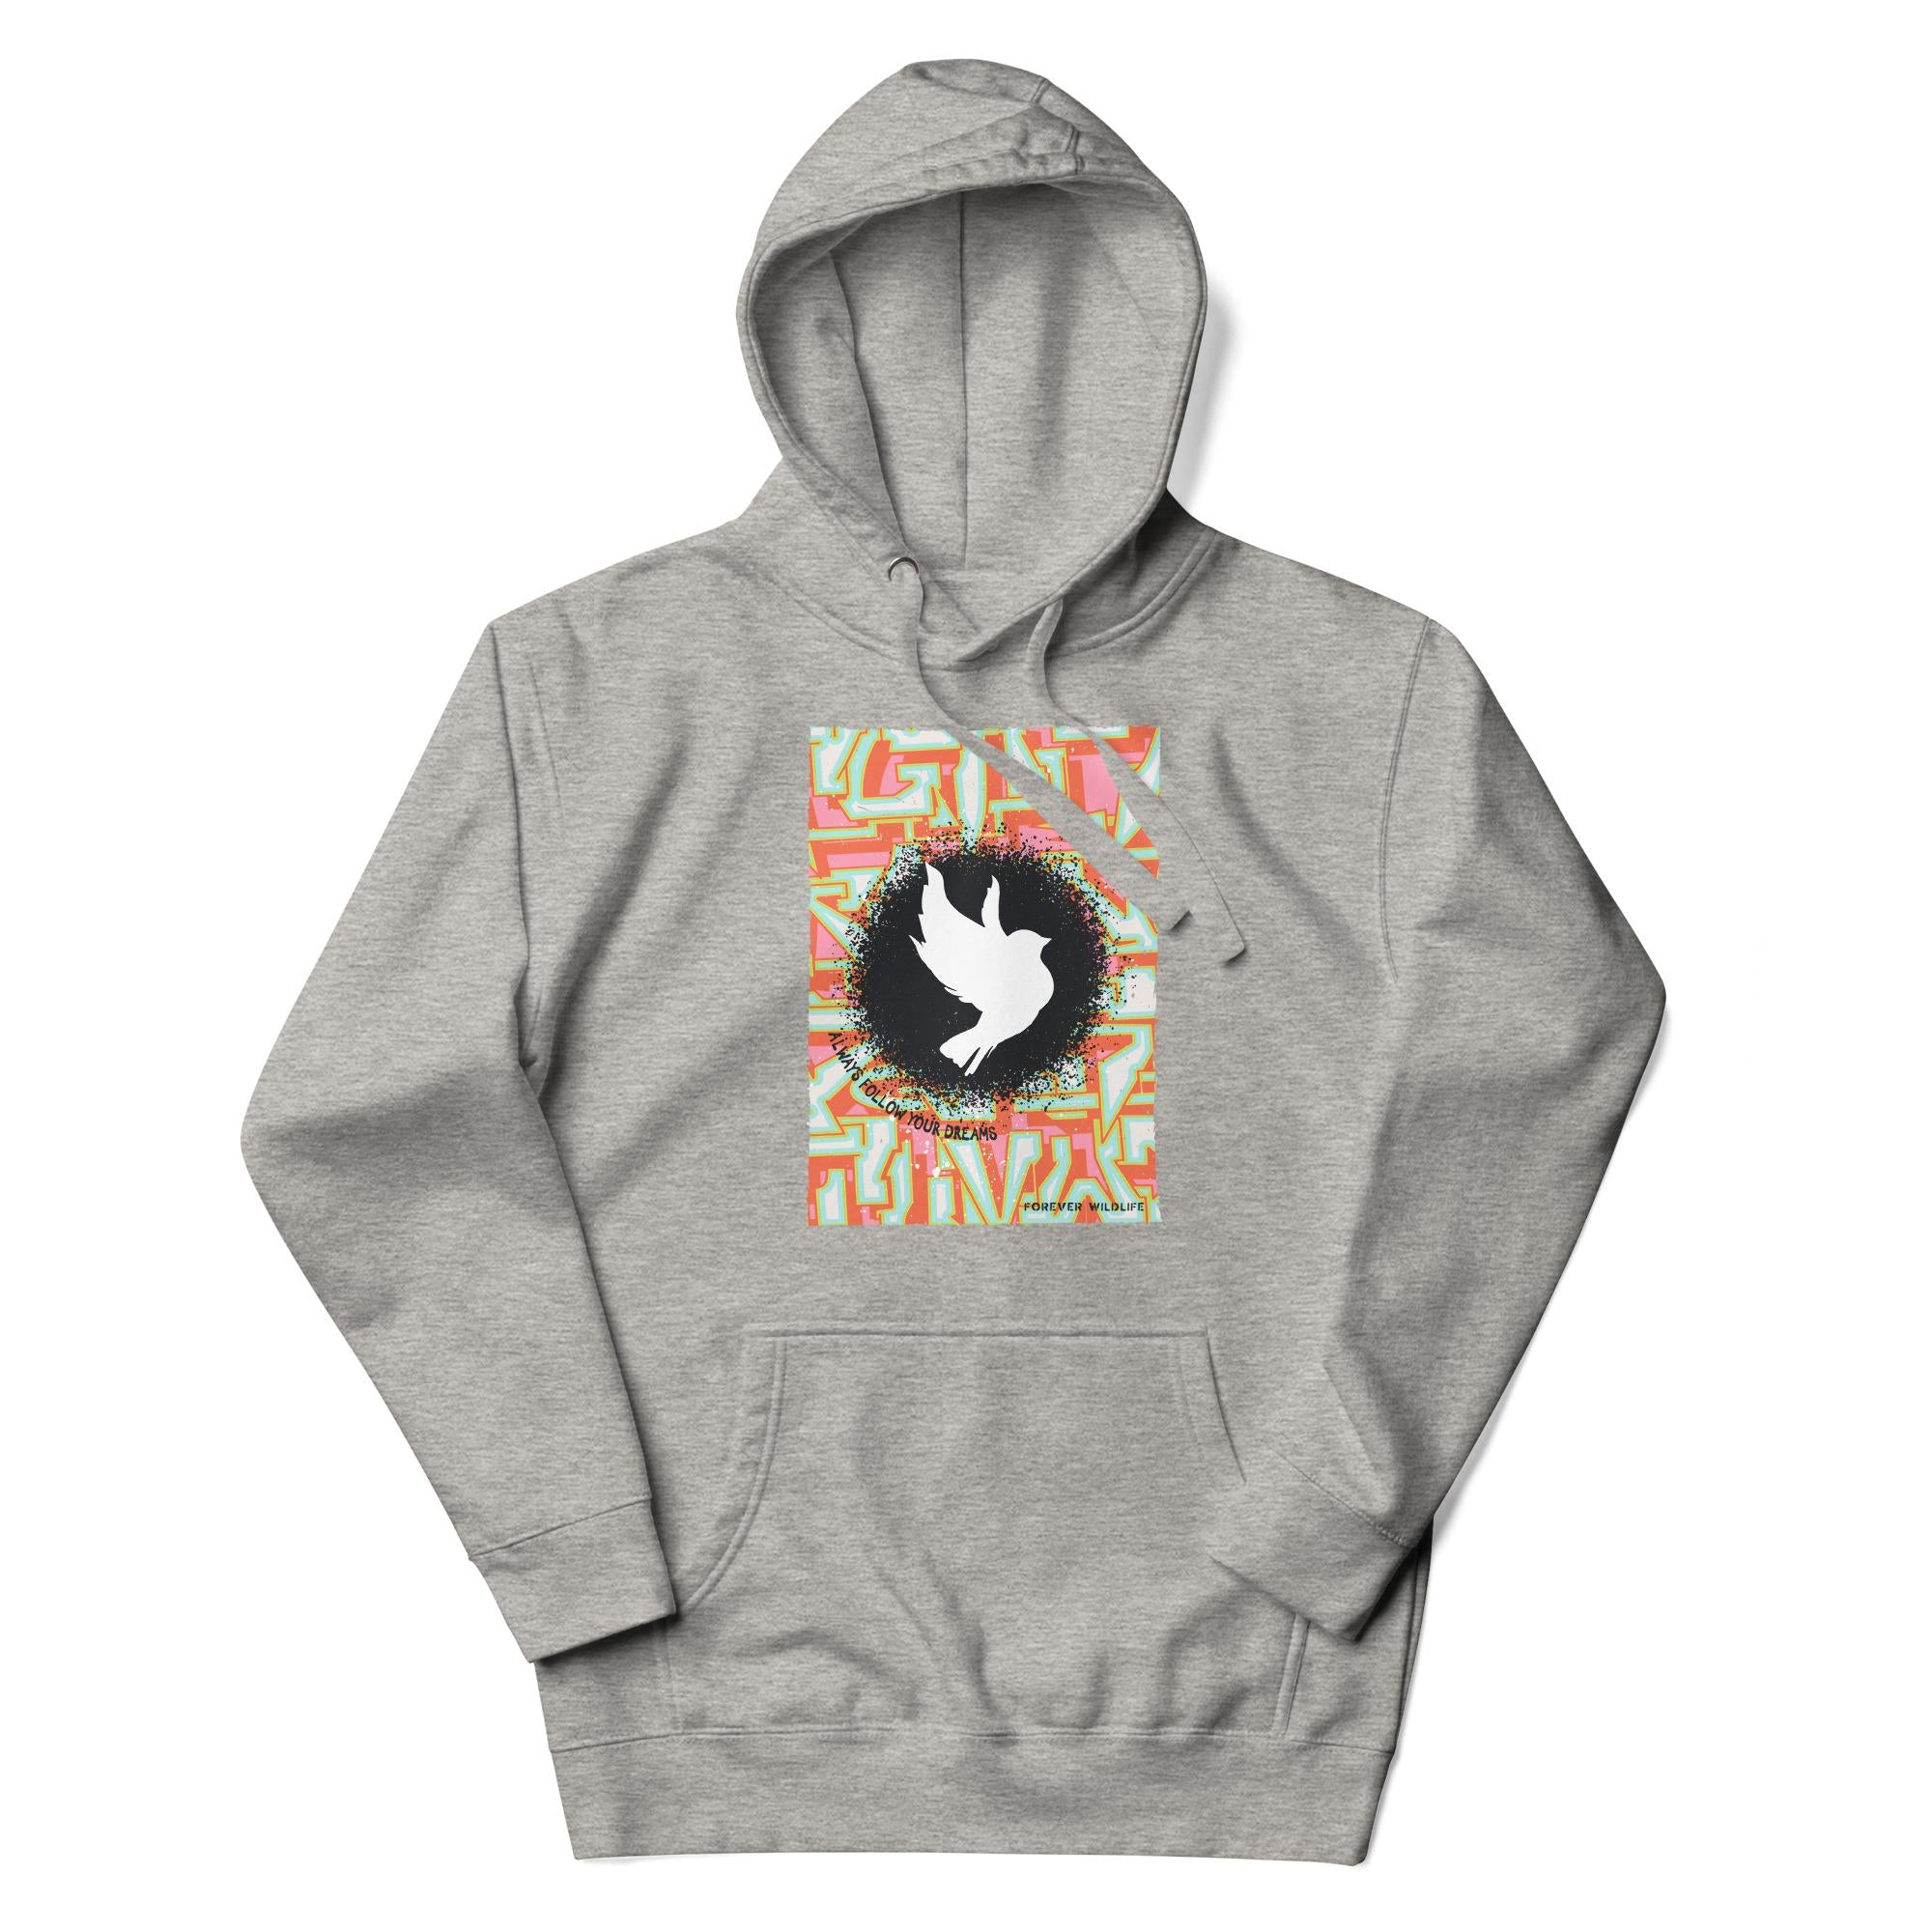 Dove Hoodie in Grey – Premium Wildlife Animal Inspirational Hoodie Design, part of Wildlife Hoodies & Clothing from Forever Wildlife